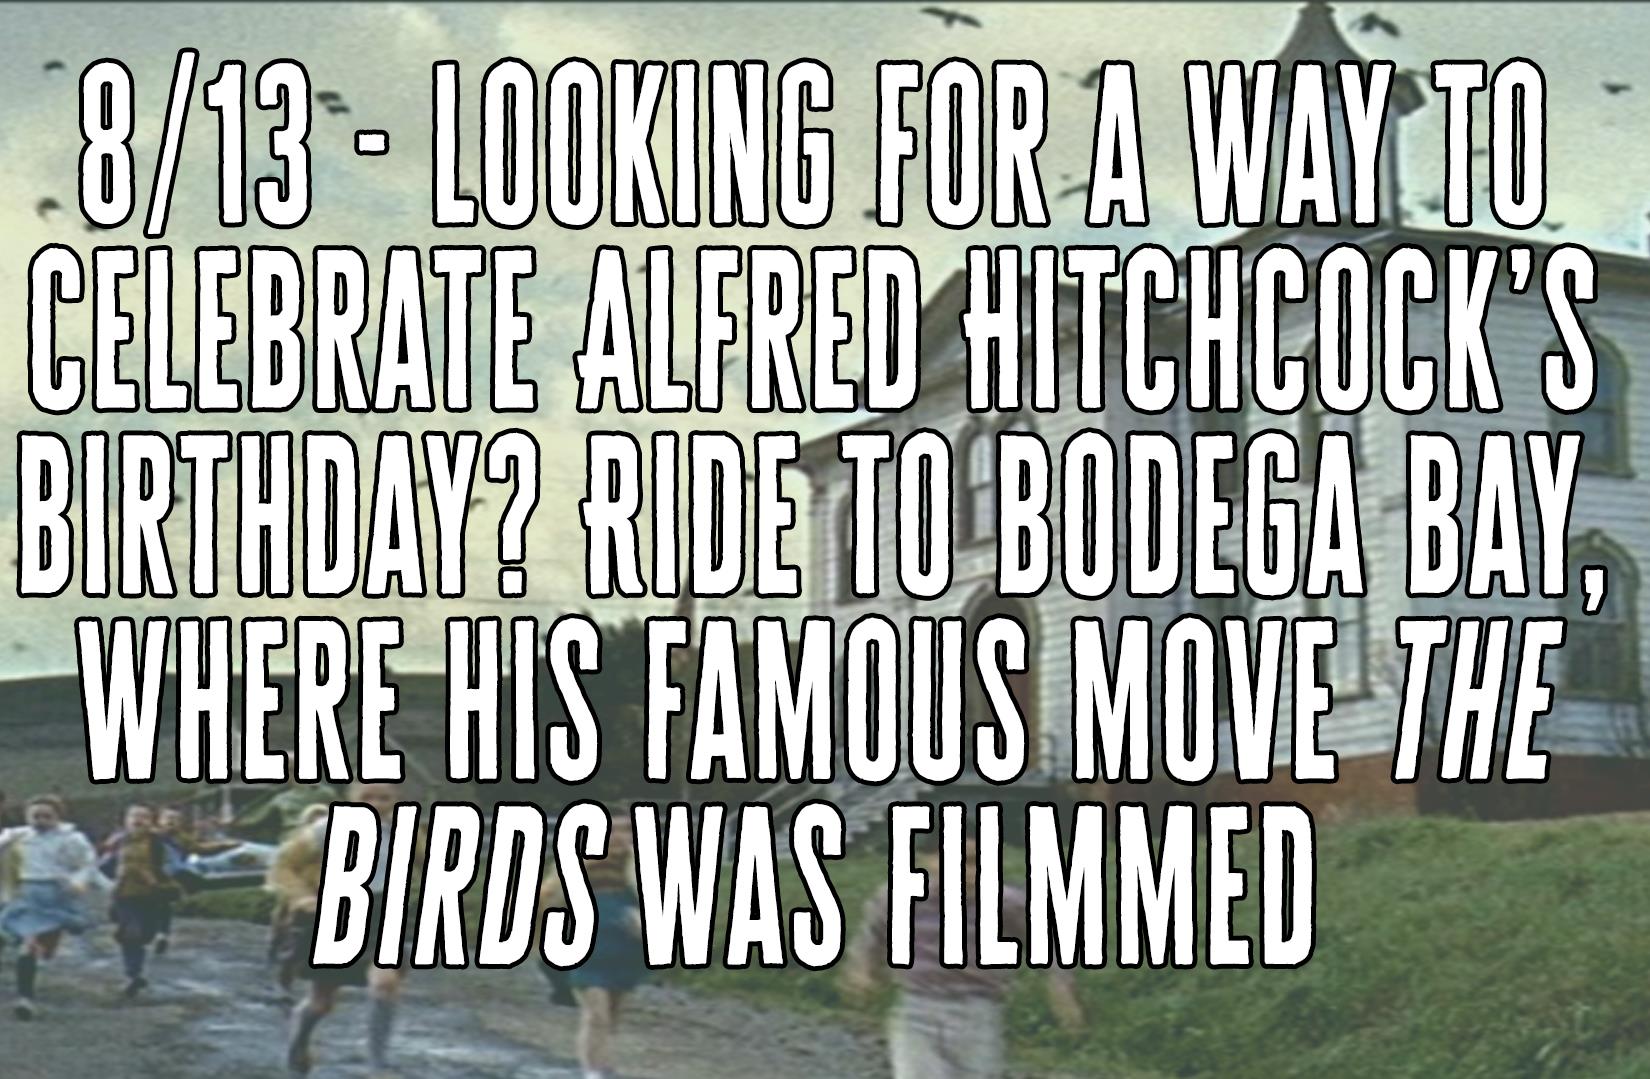 Alfred Hitchcock's Birthday - Ride to Bodega Bay